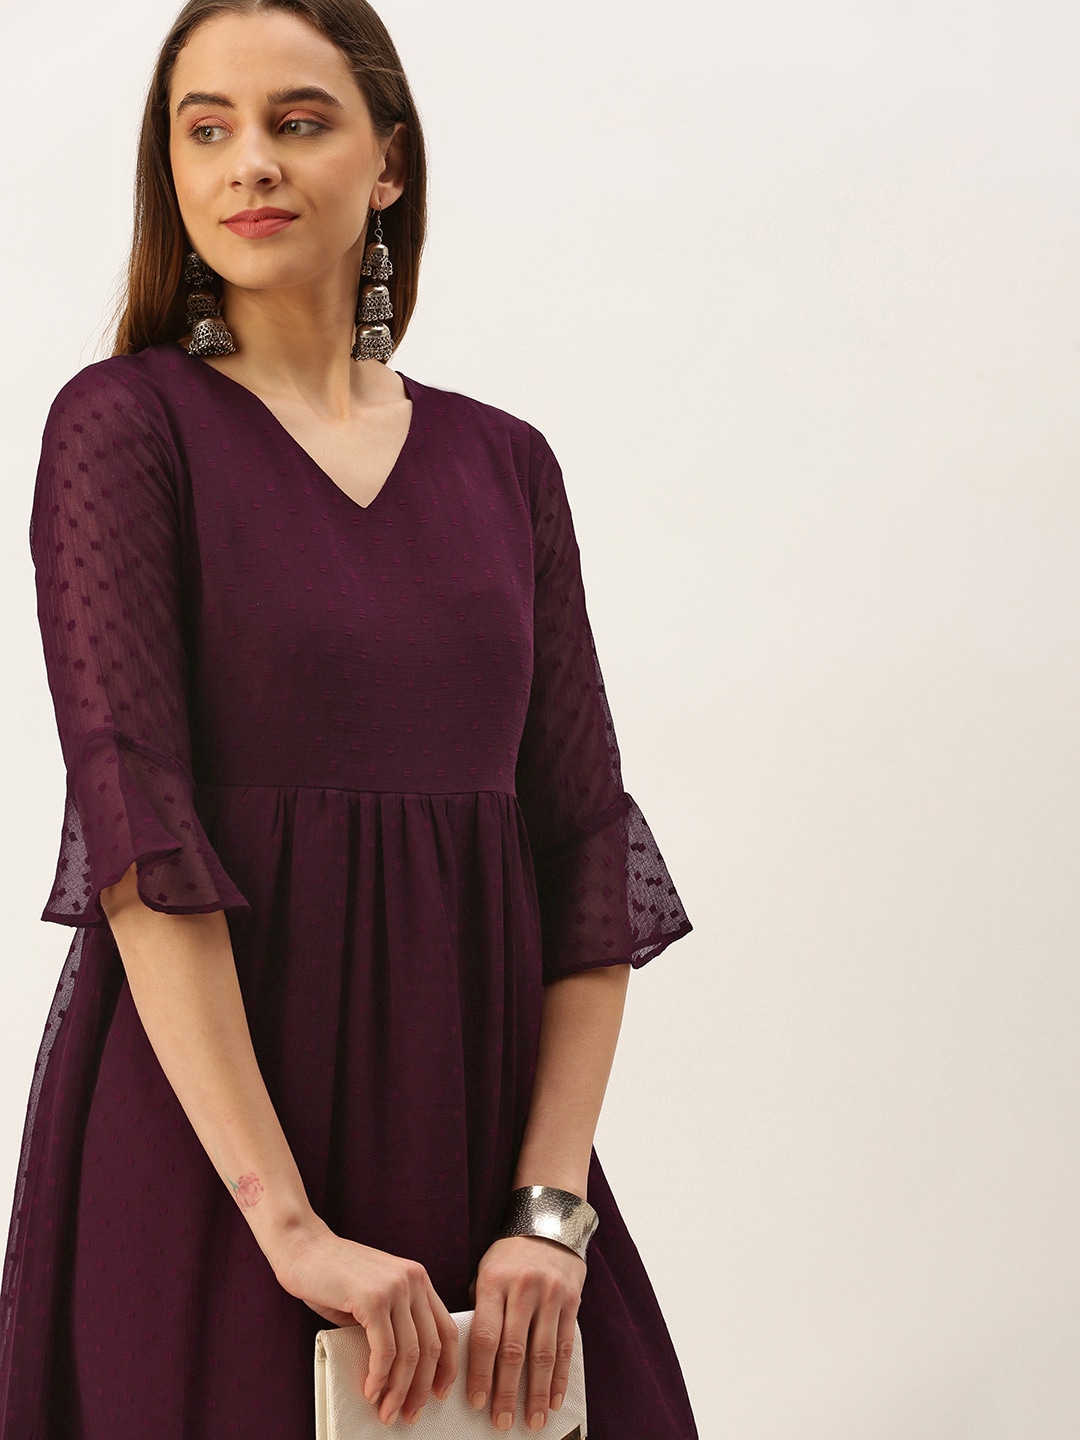 SWAGG INDIA Purple Chiffon Ethnic Midi Dress Price in India